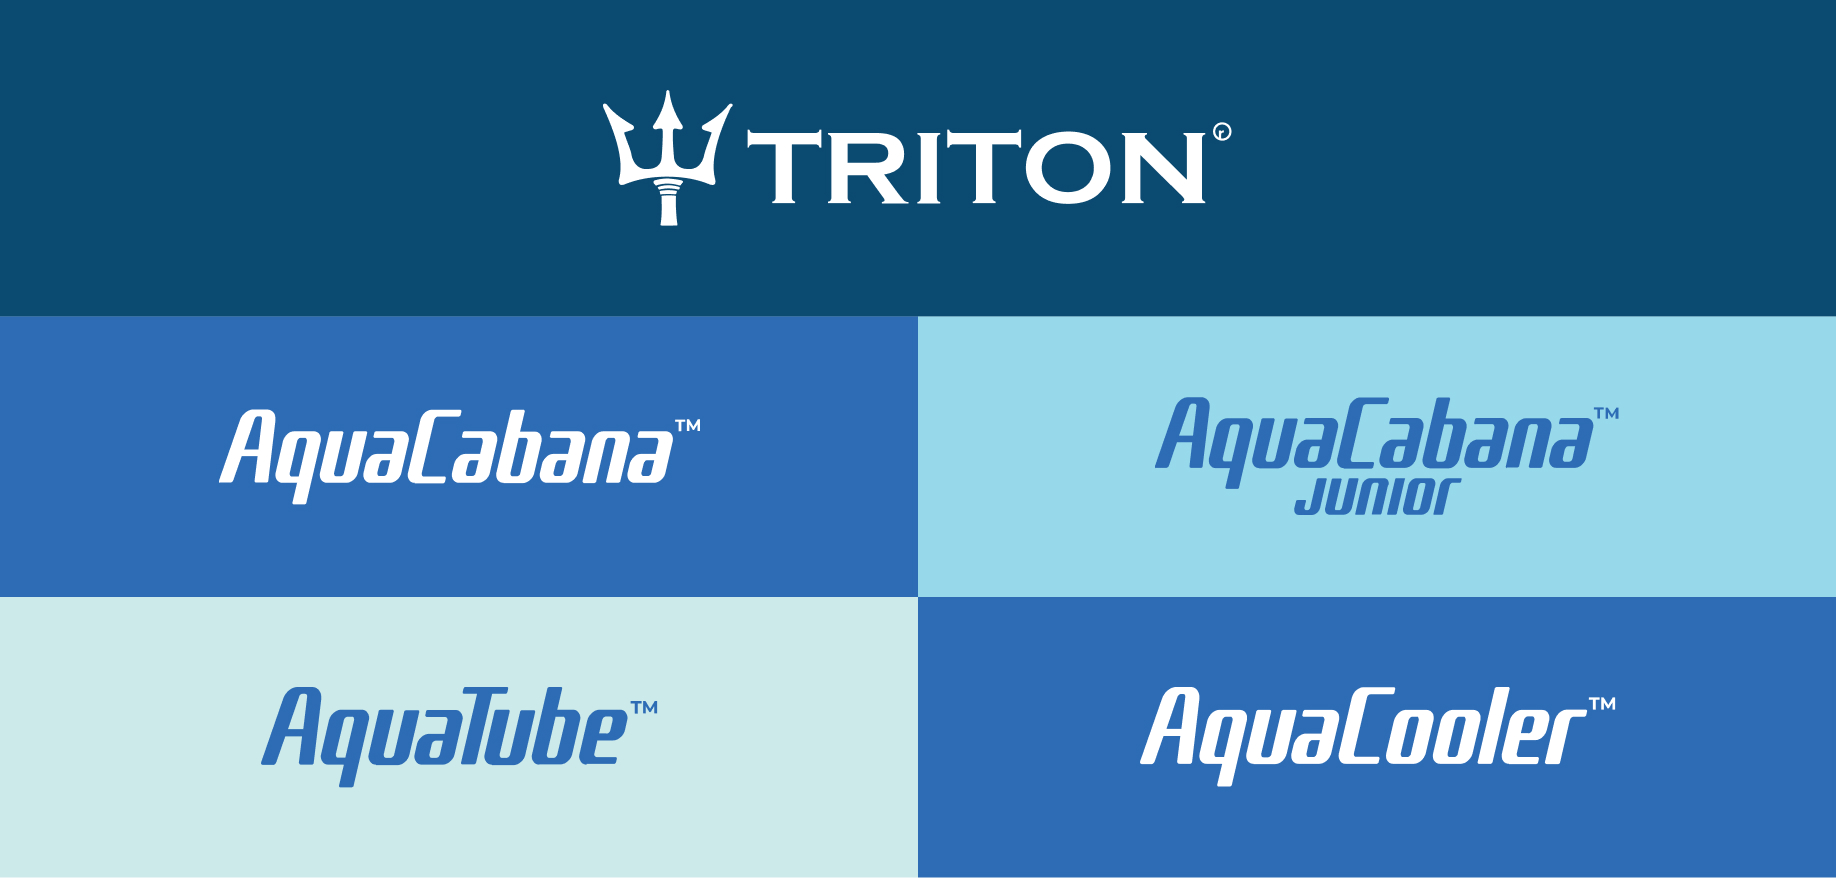 Triton Product family